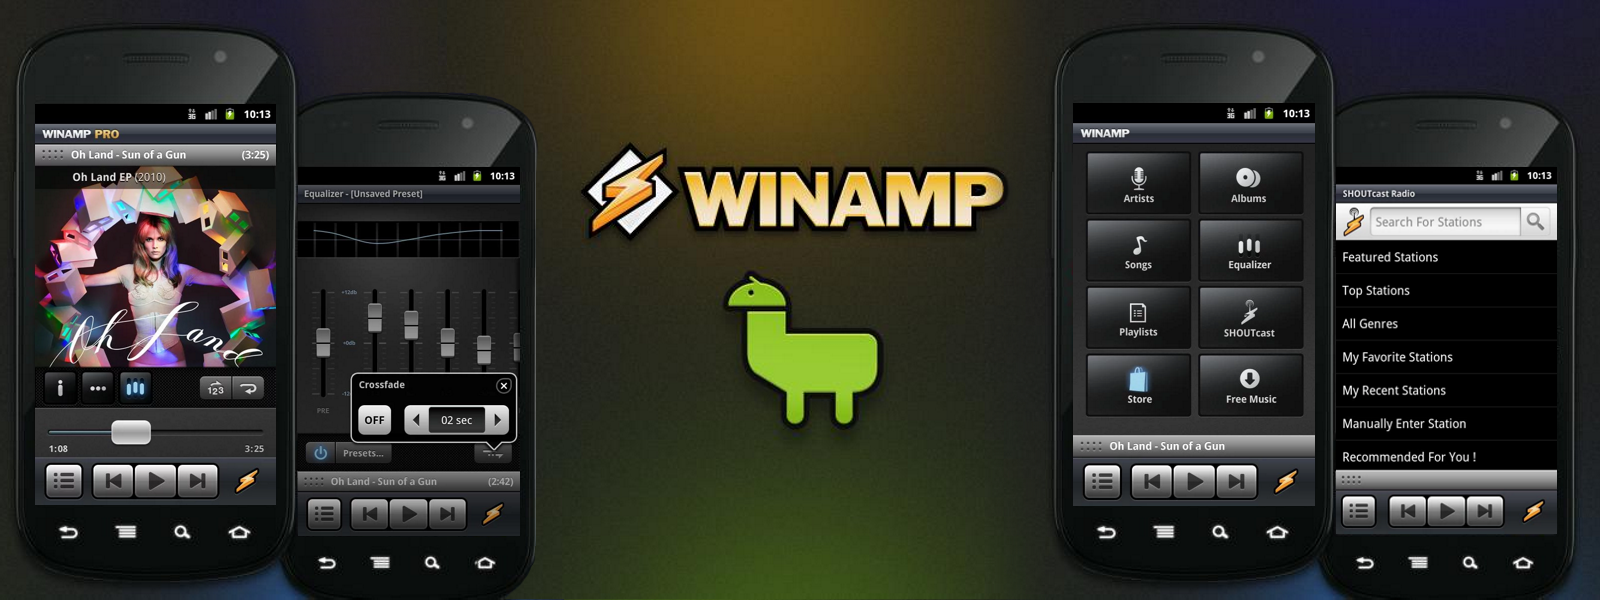 winamp pro apk download